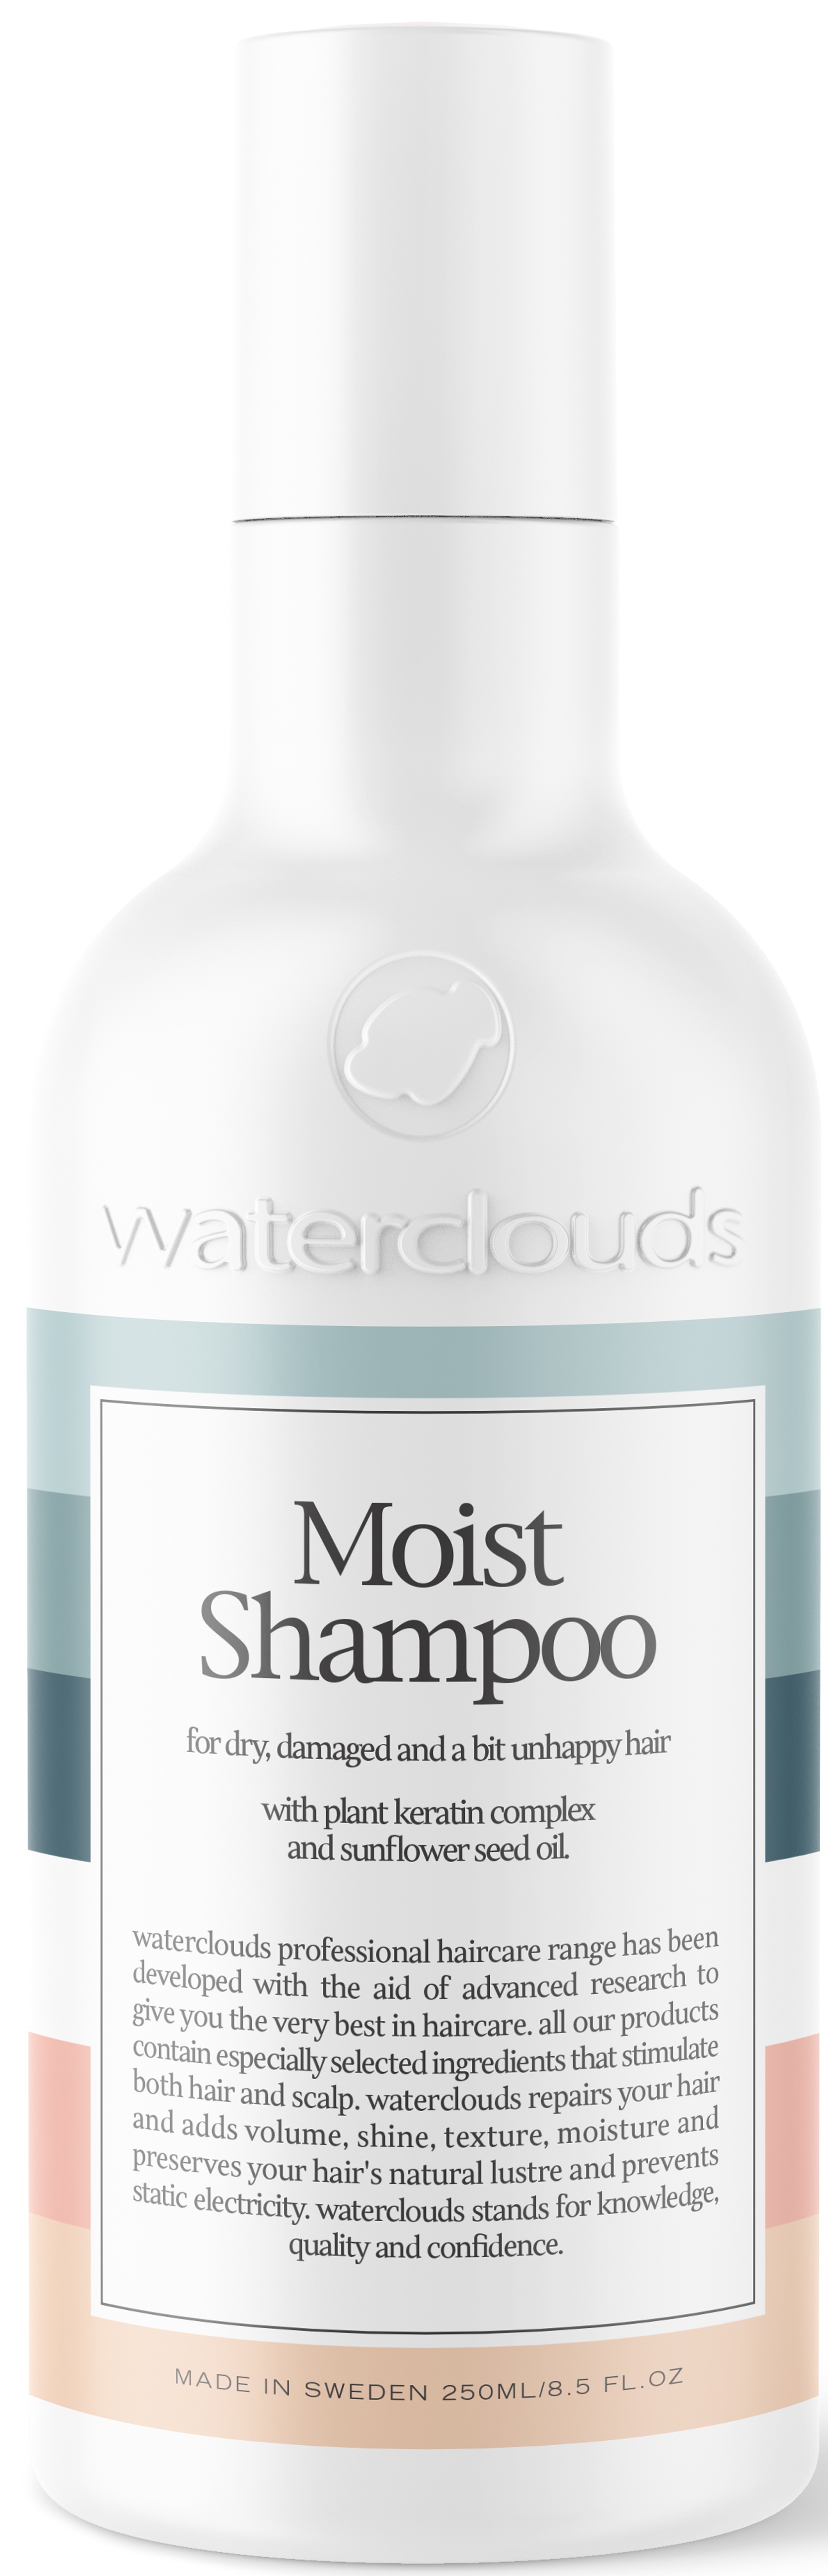 Touhou vejspærring Køb Waterclouds Daily Care Shampoo 250 ml | lyko.com